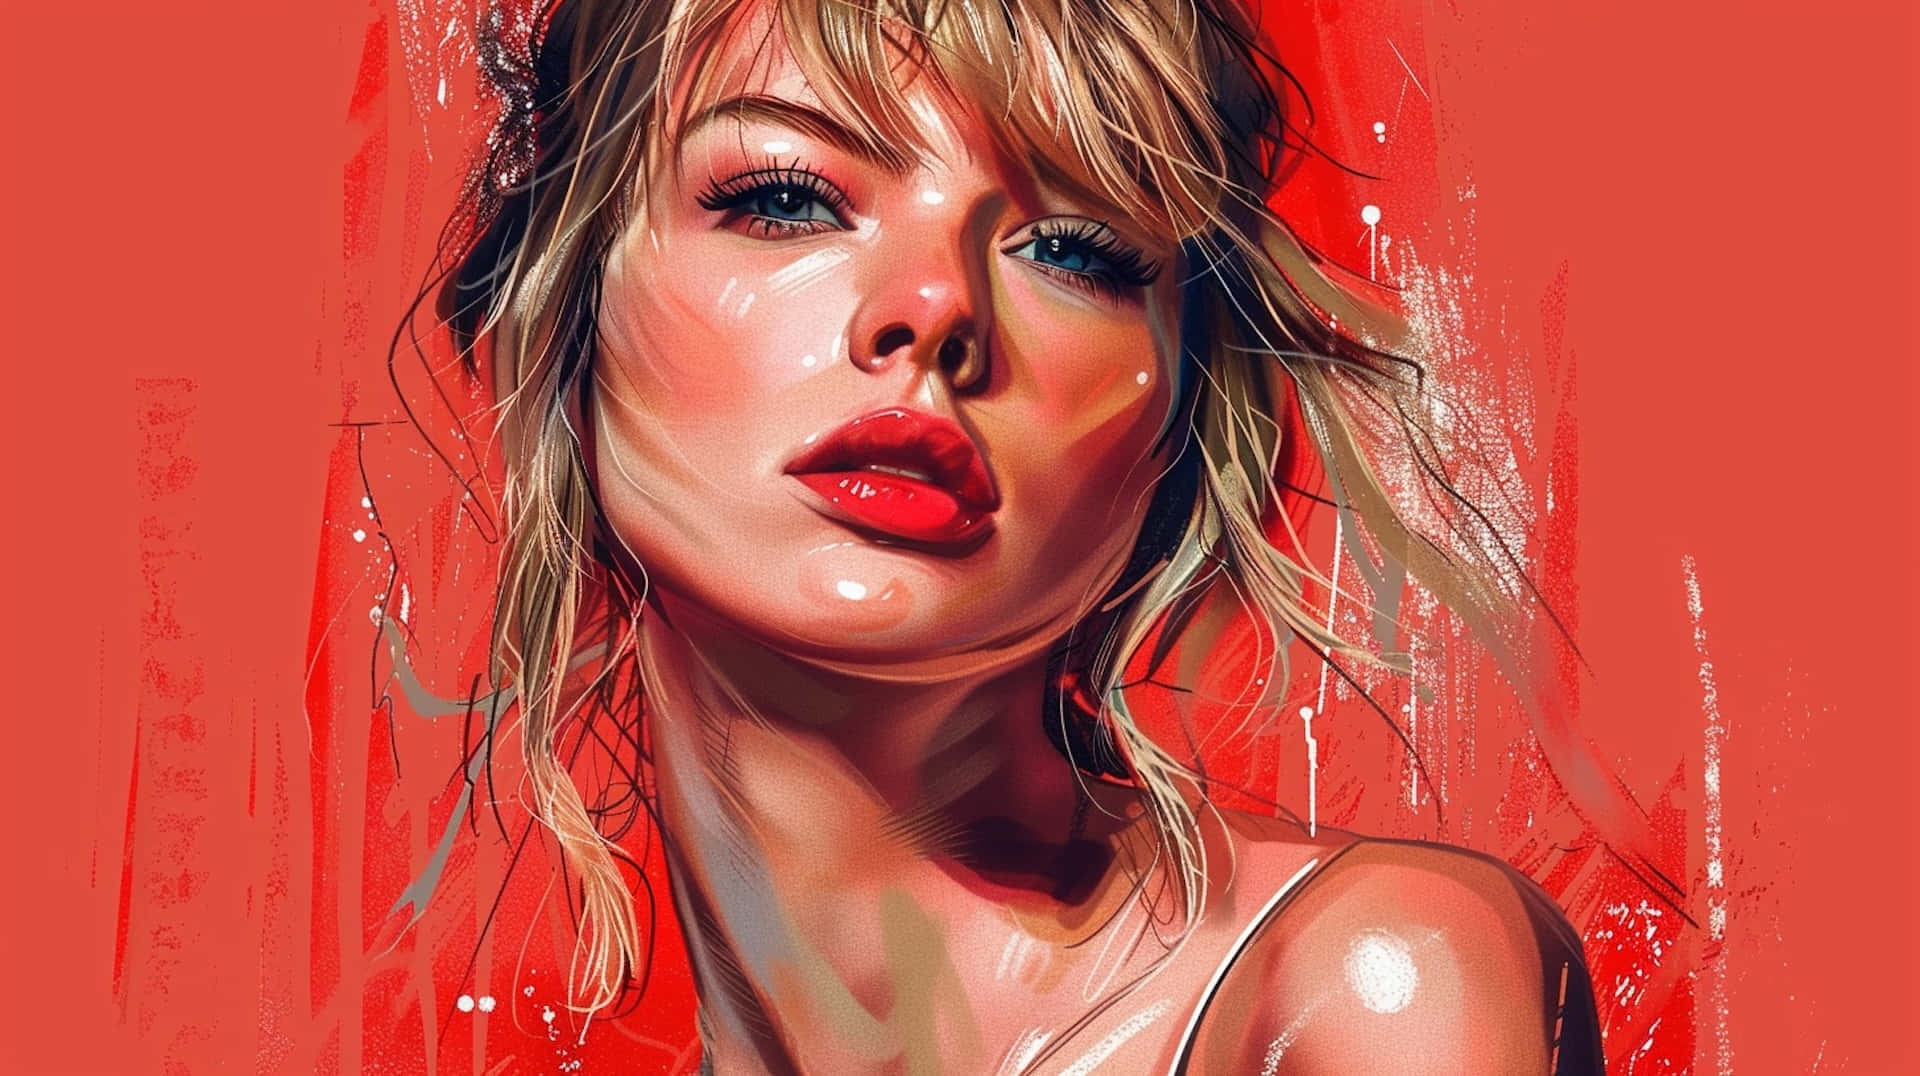 Red Artistic Portraitof Woman Wallpaper